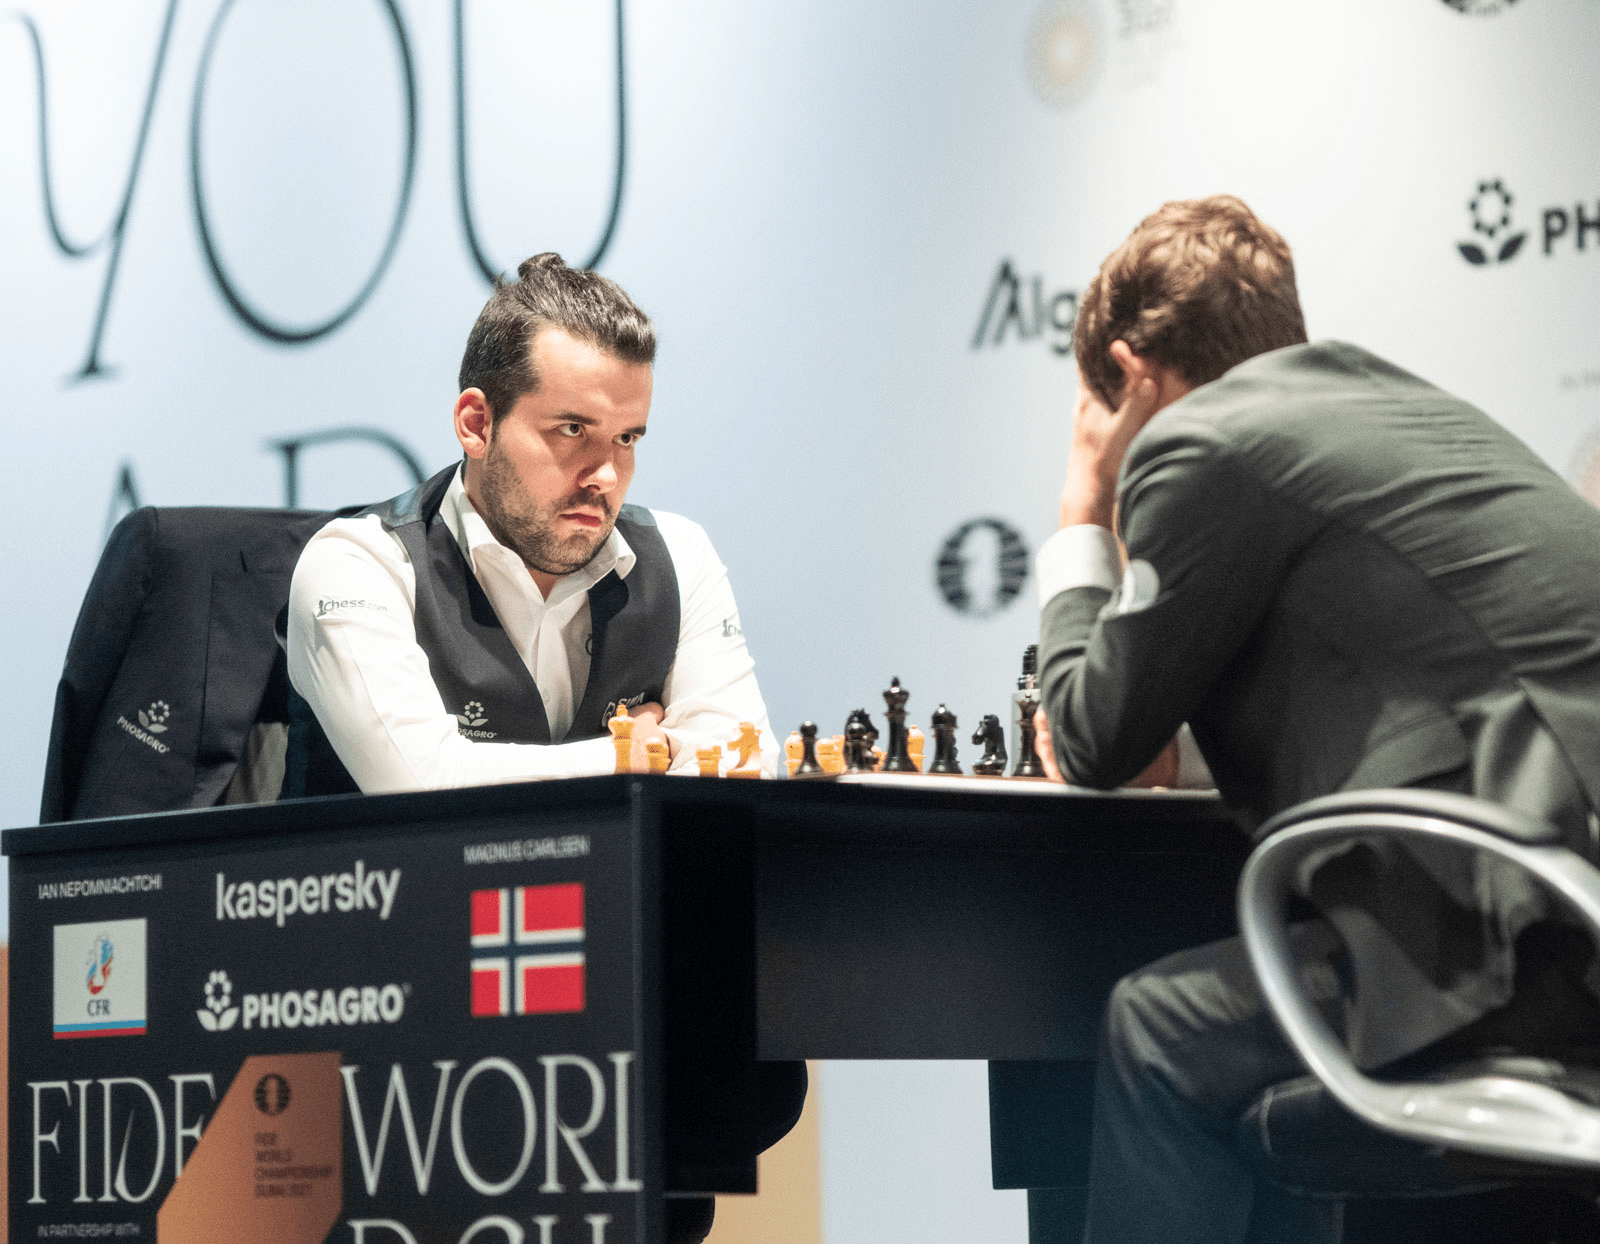 Campeonato Mundial da FIDE: o aventureiro Carlsen luta pelo empate 